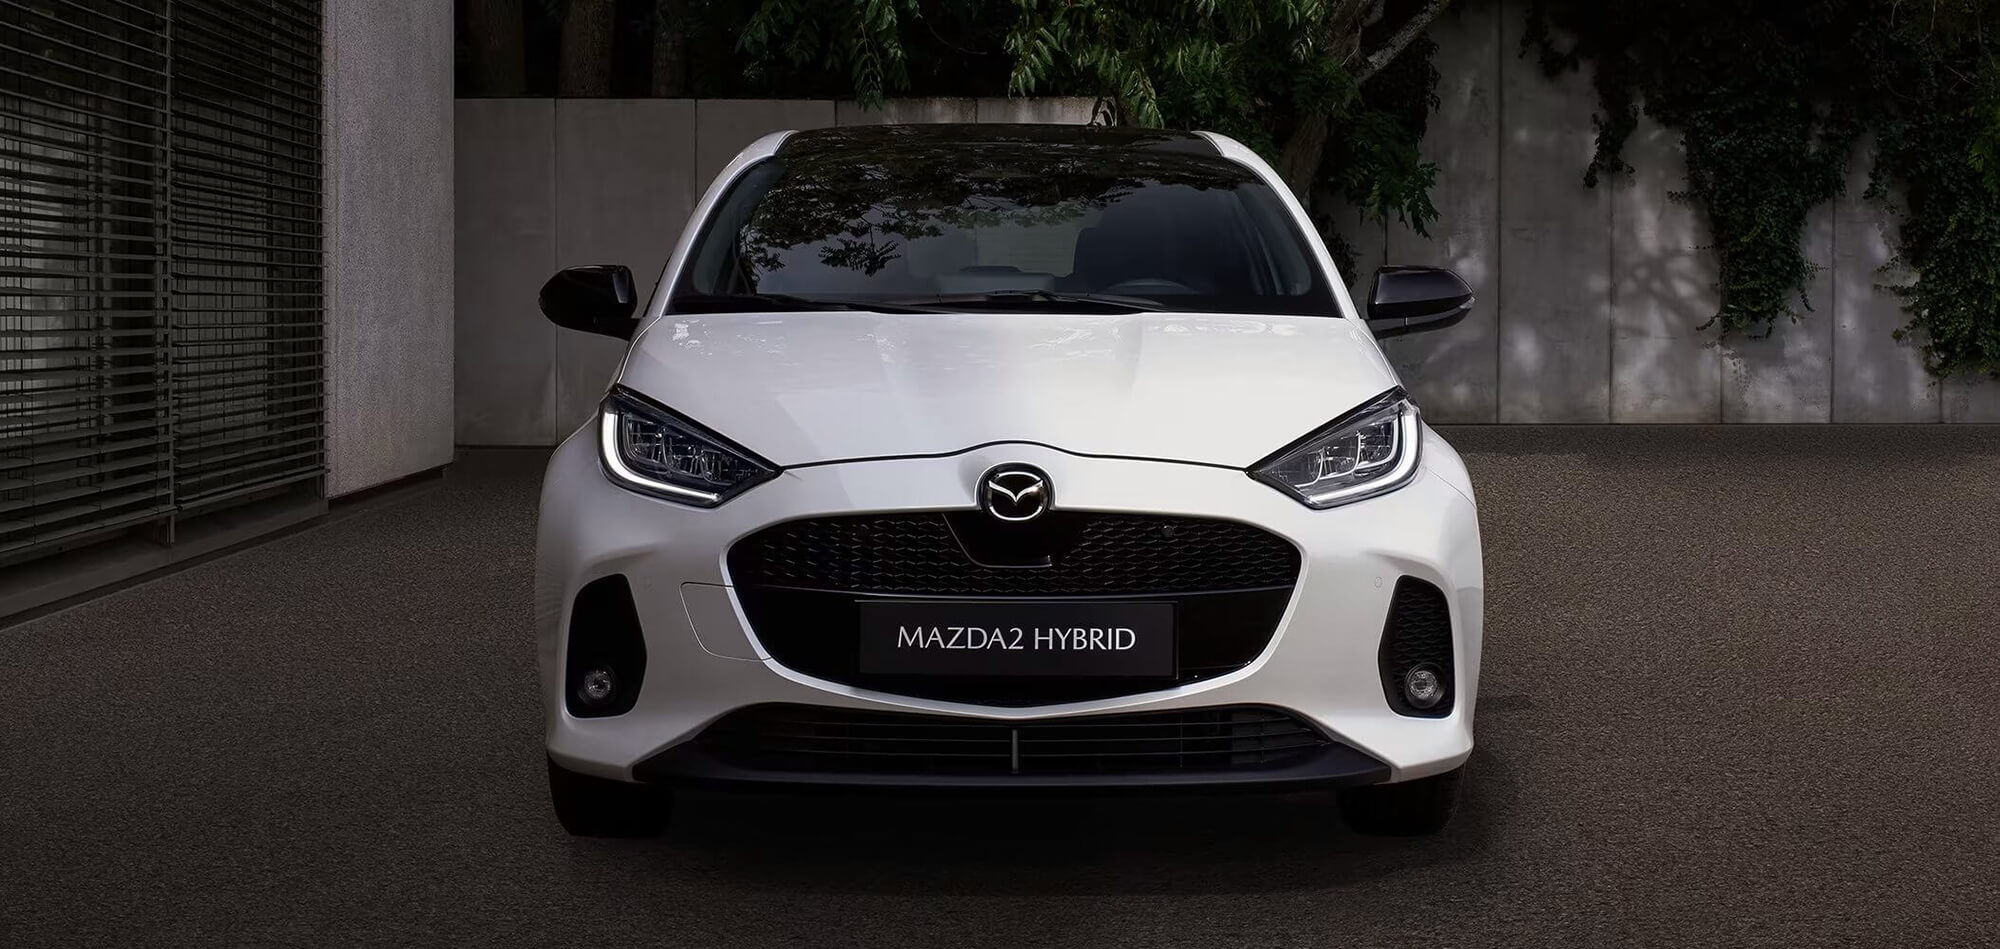 White Mazda2 Hybrid car front view.